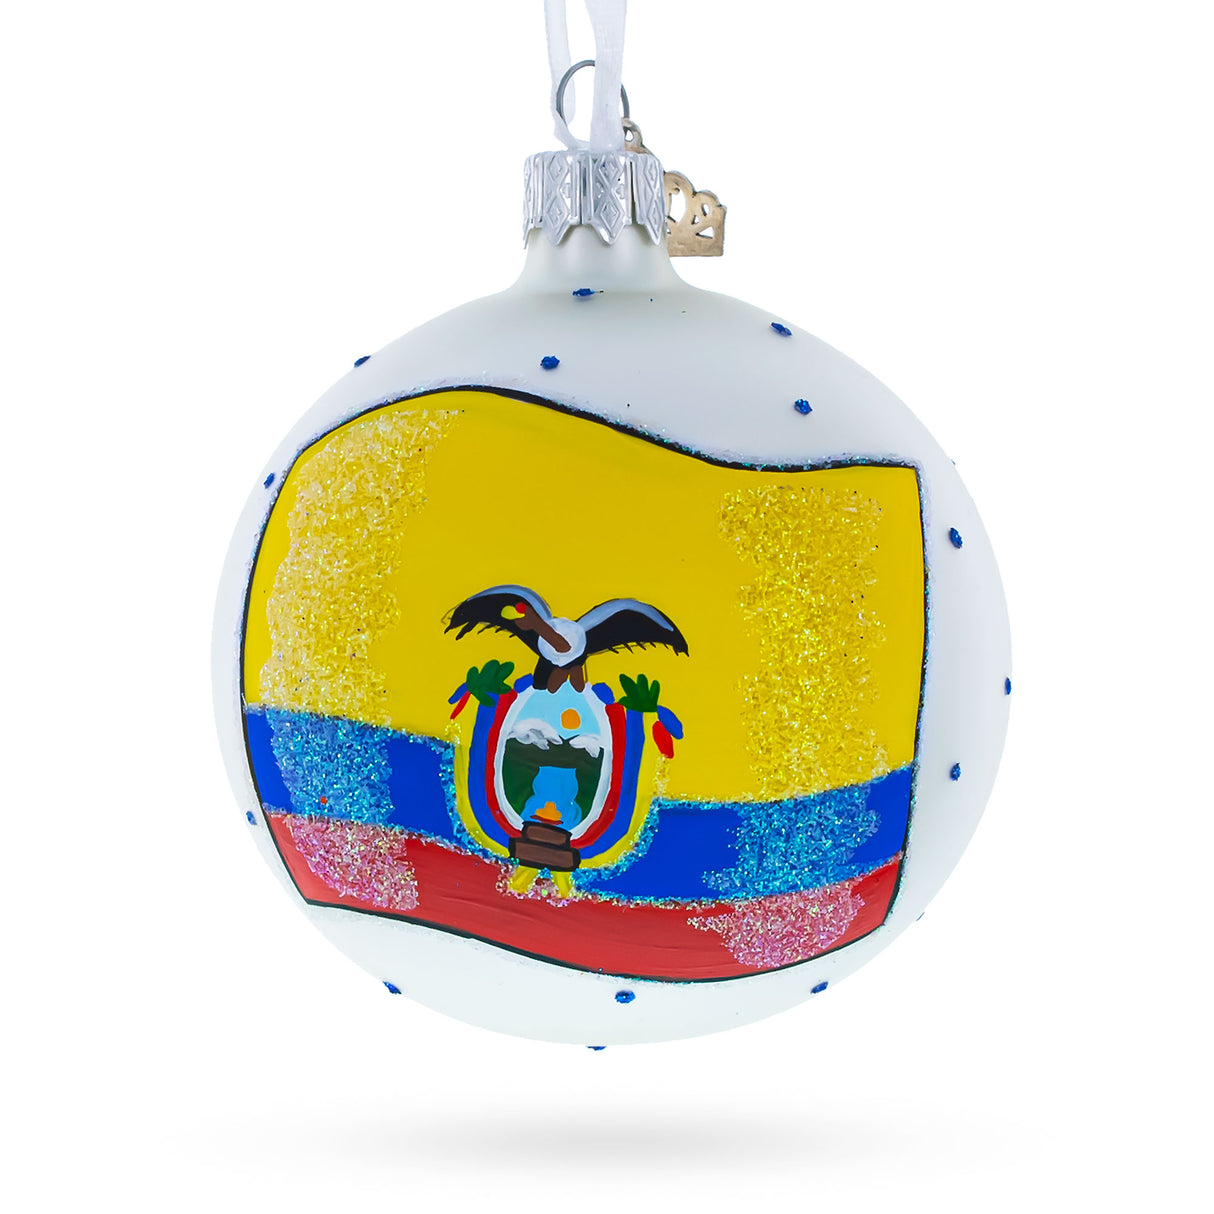 Elegant Ecuadorian Flag Blown Glass Ball Christmas Ornament 3.25 Inches in Multi color, Round shape